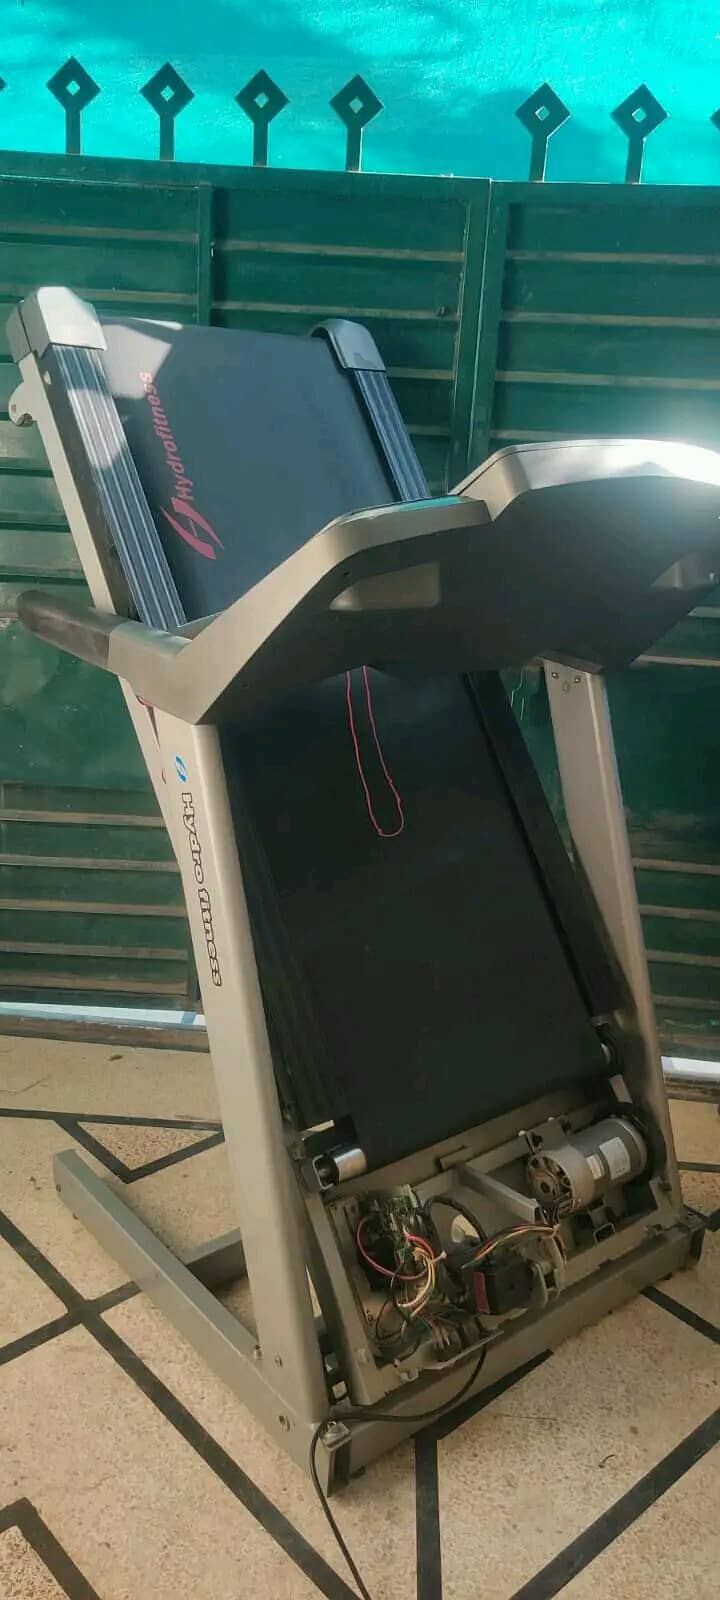 Hydro fitness treadmill for sale 0316/1736/128 whatsapp 8